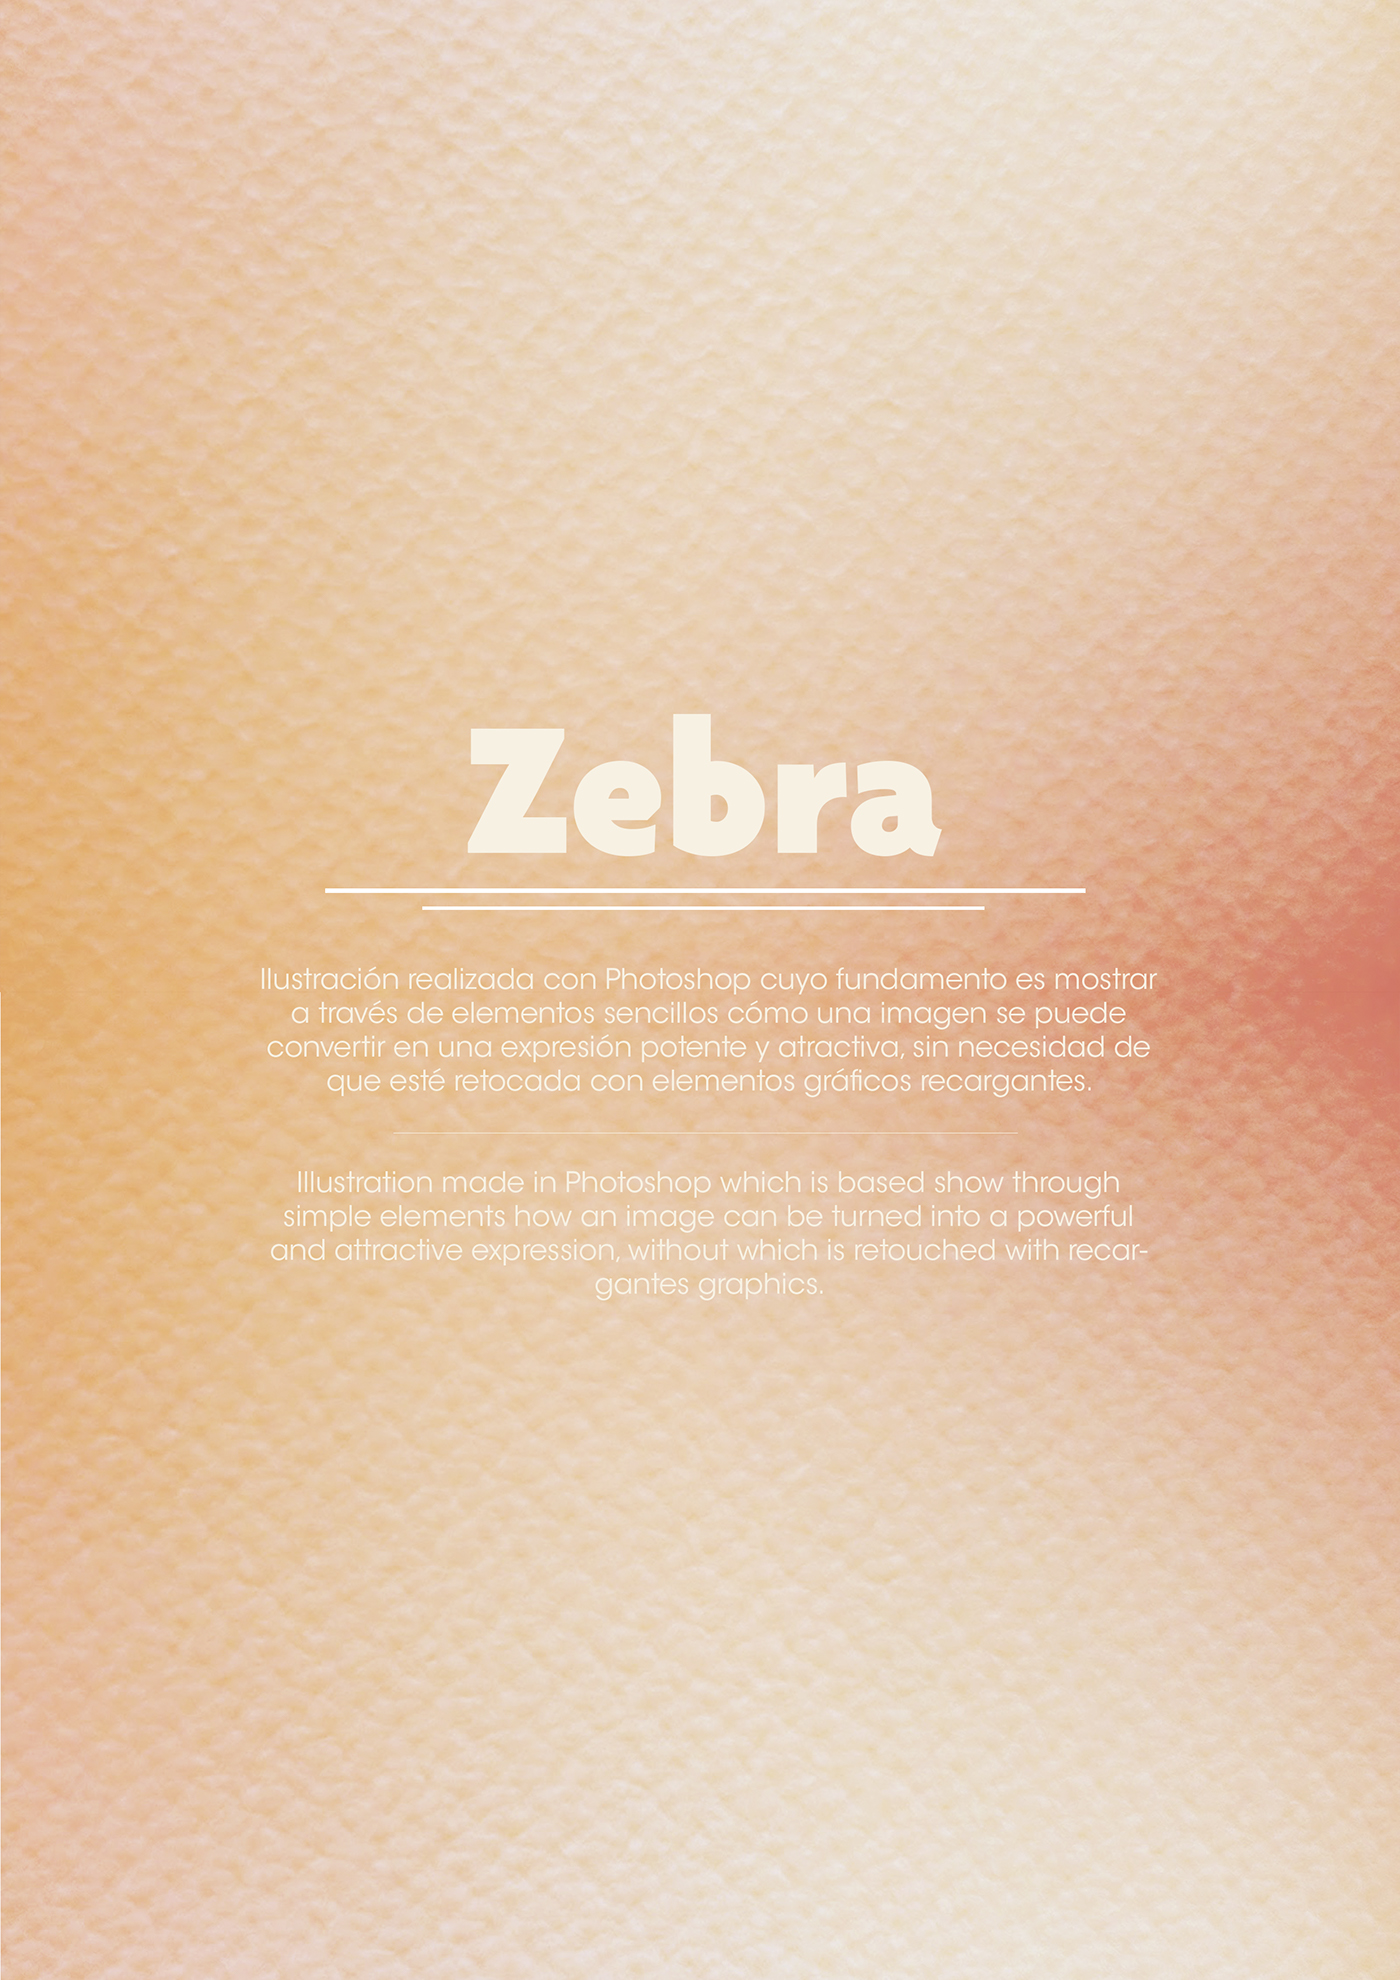 zebra poster degradados photoshop Degradado pajaros diseño grafico graphicdesign design efectos geometria